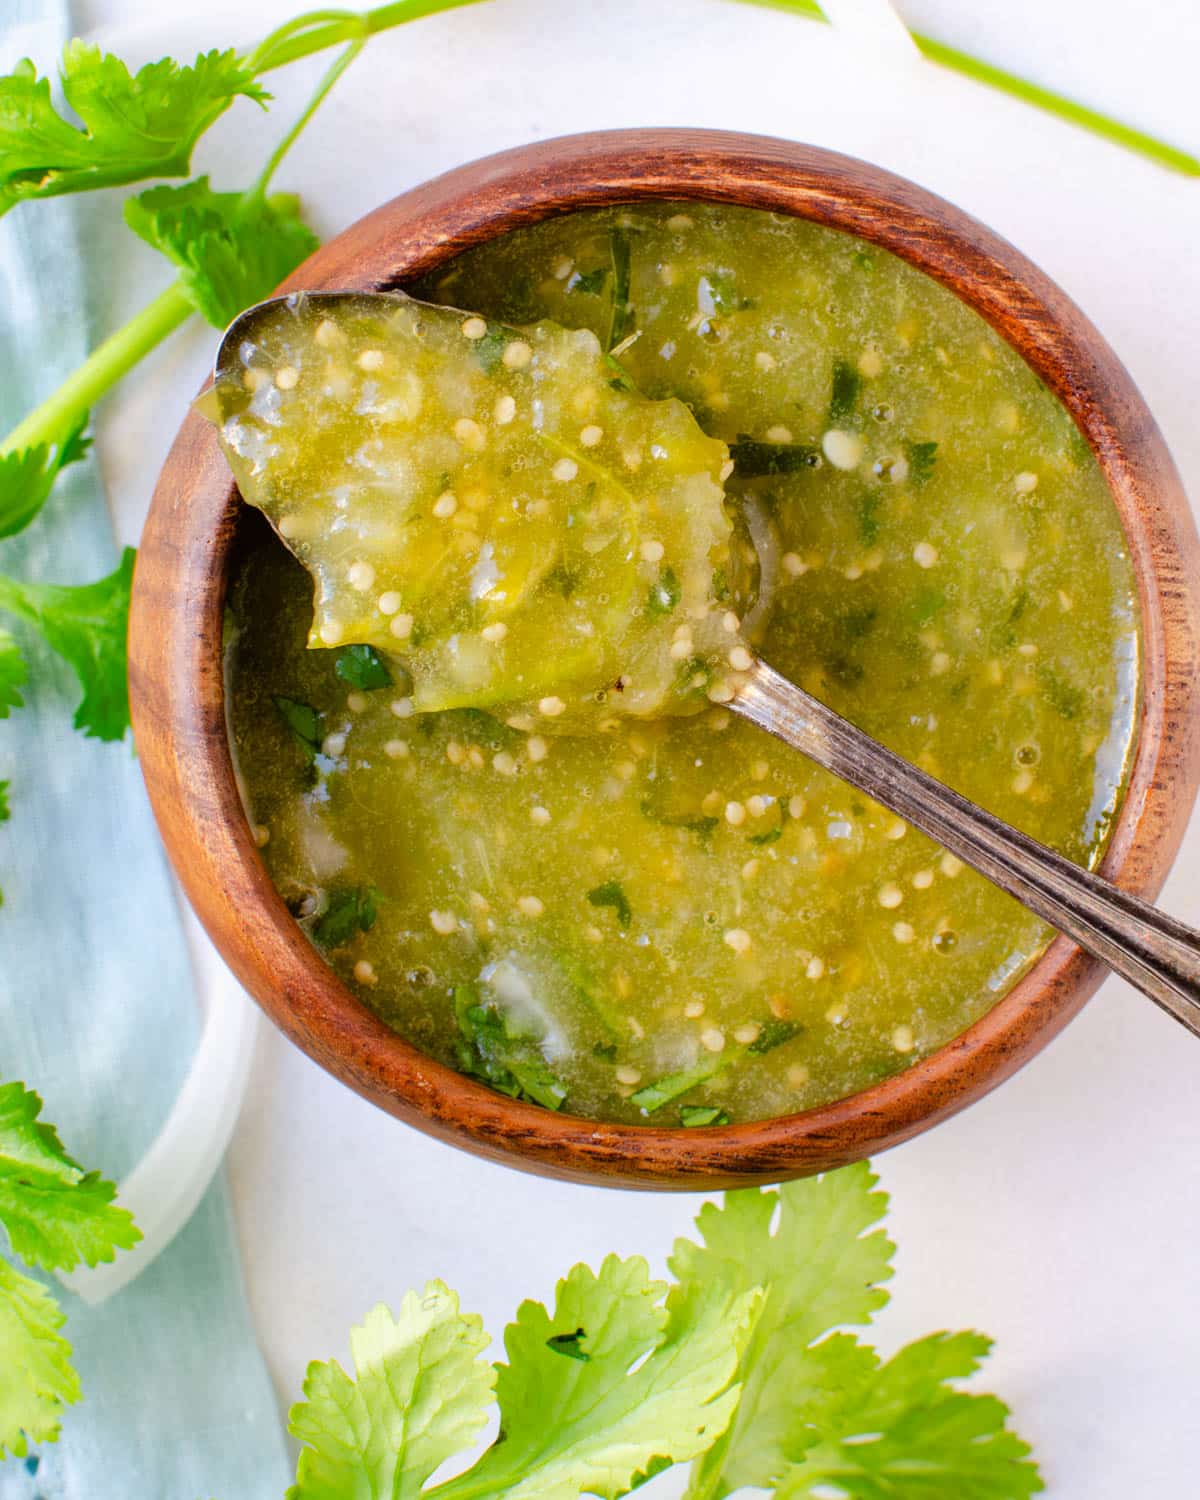 Spooning up the salsa verde.